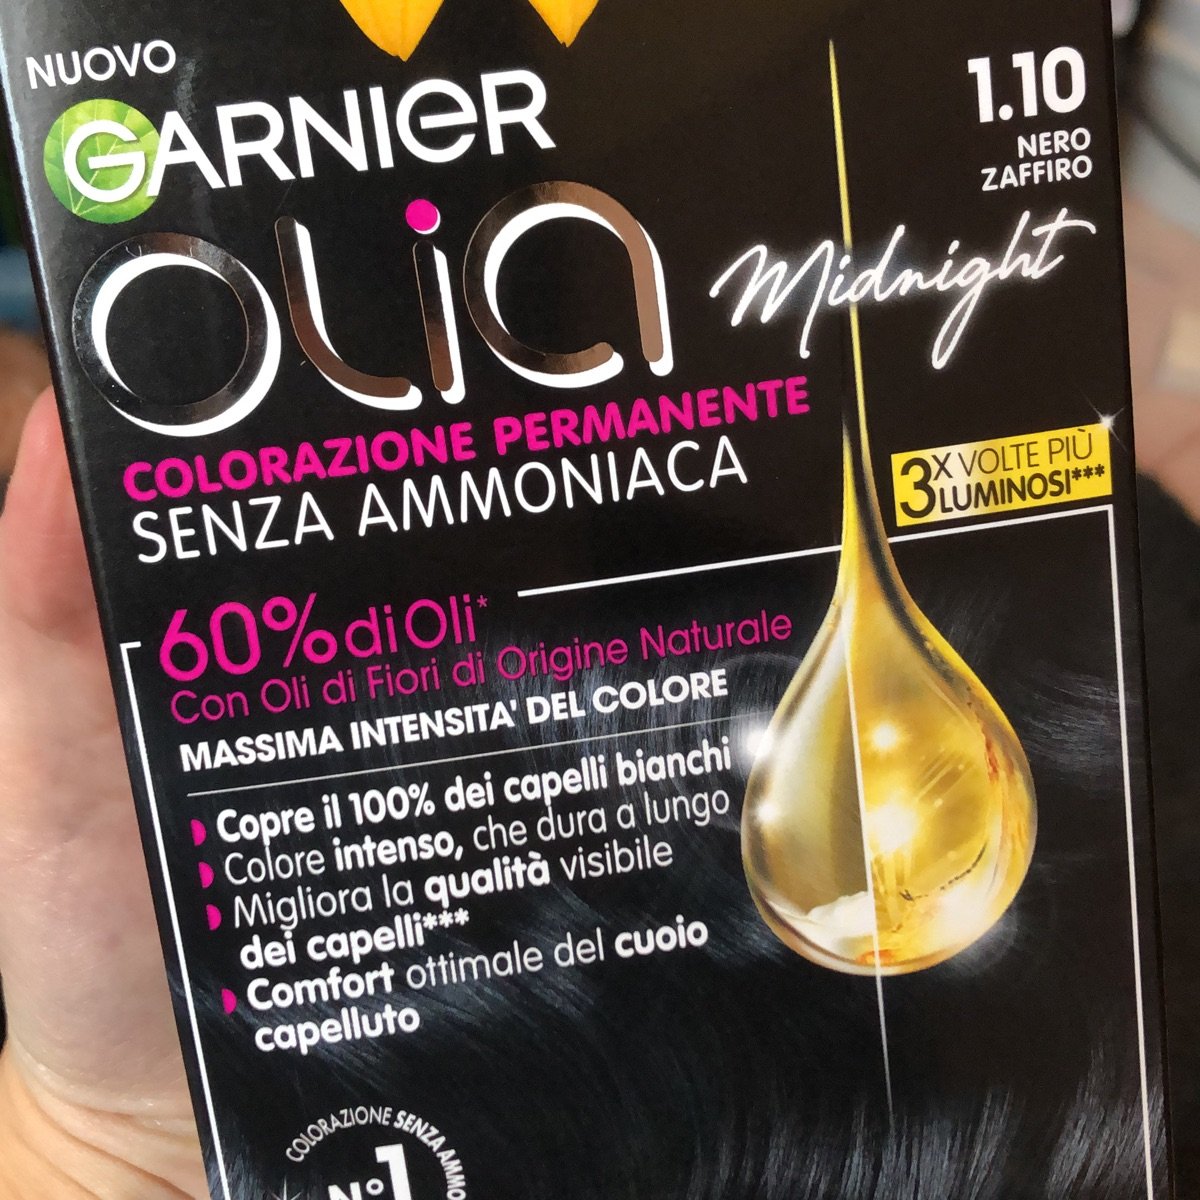 Garnier Olia nero zaffiro midnight 1.10 Reviews | abillion